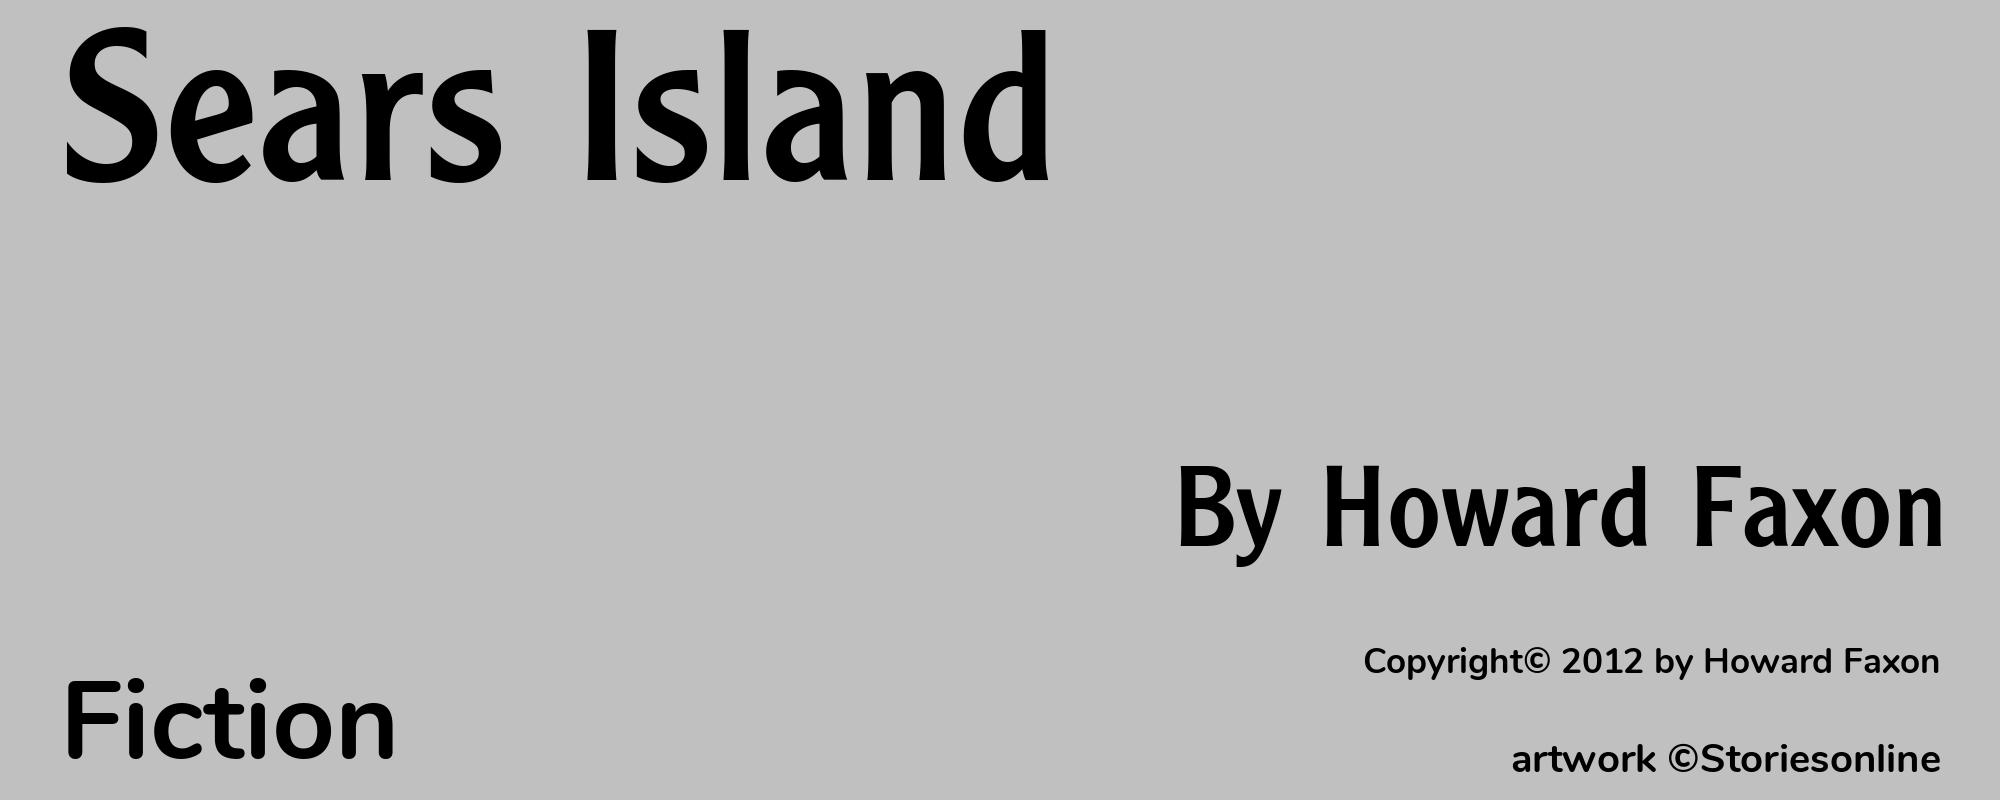 Sears Island - Cover